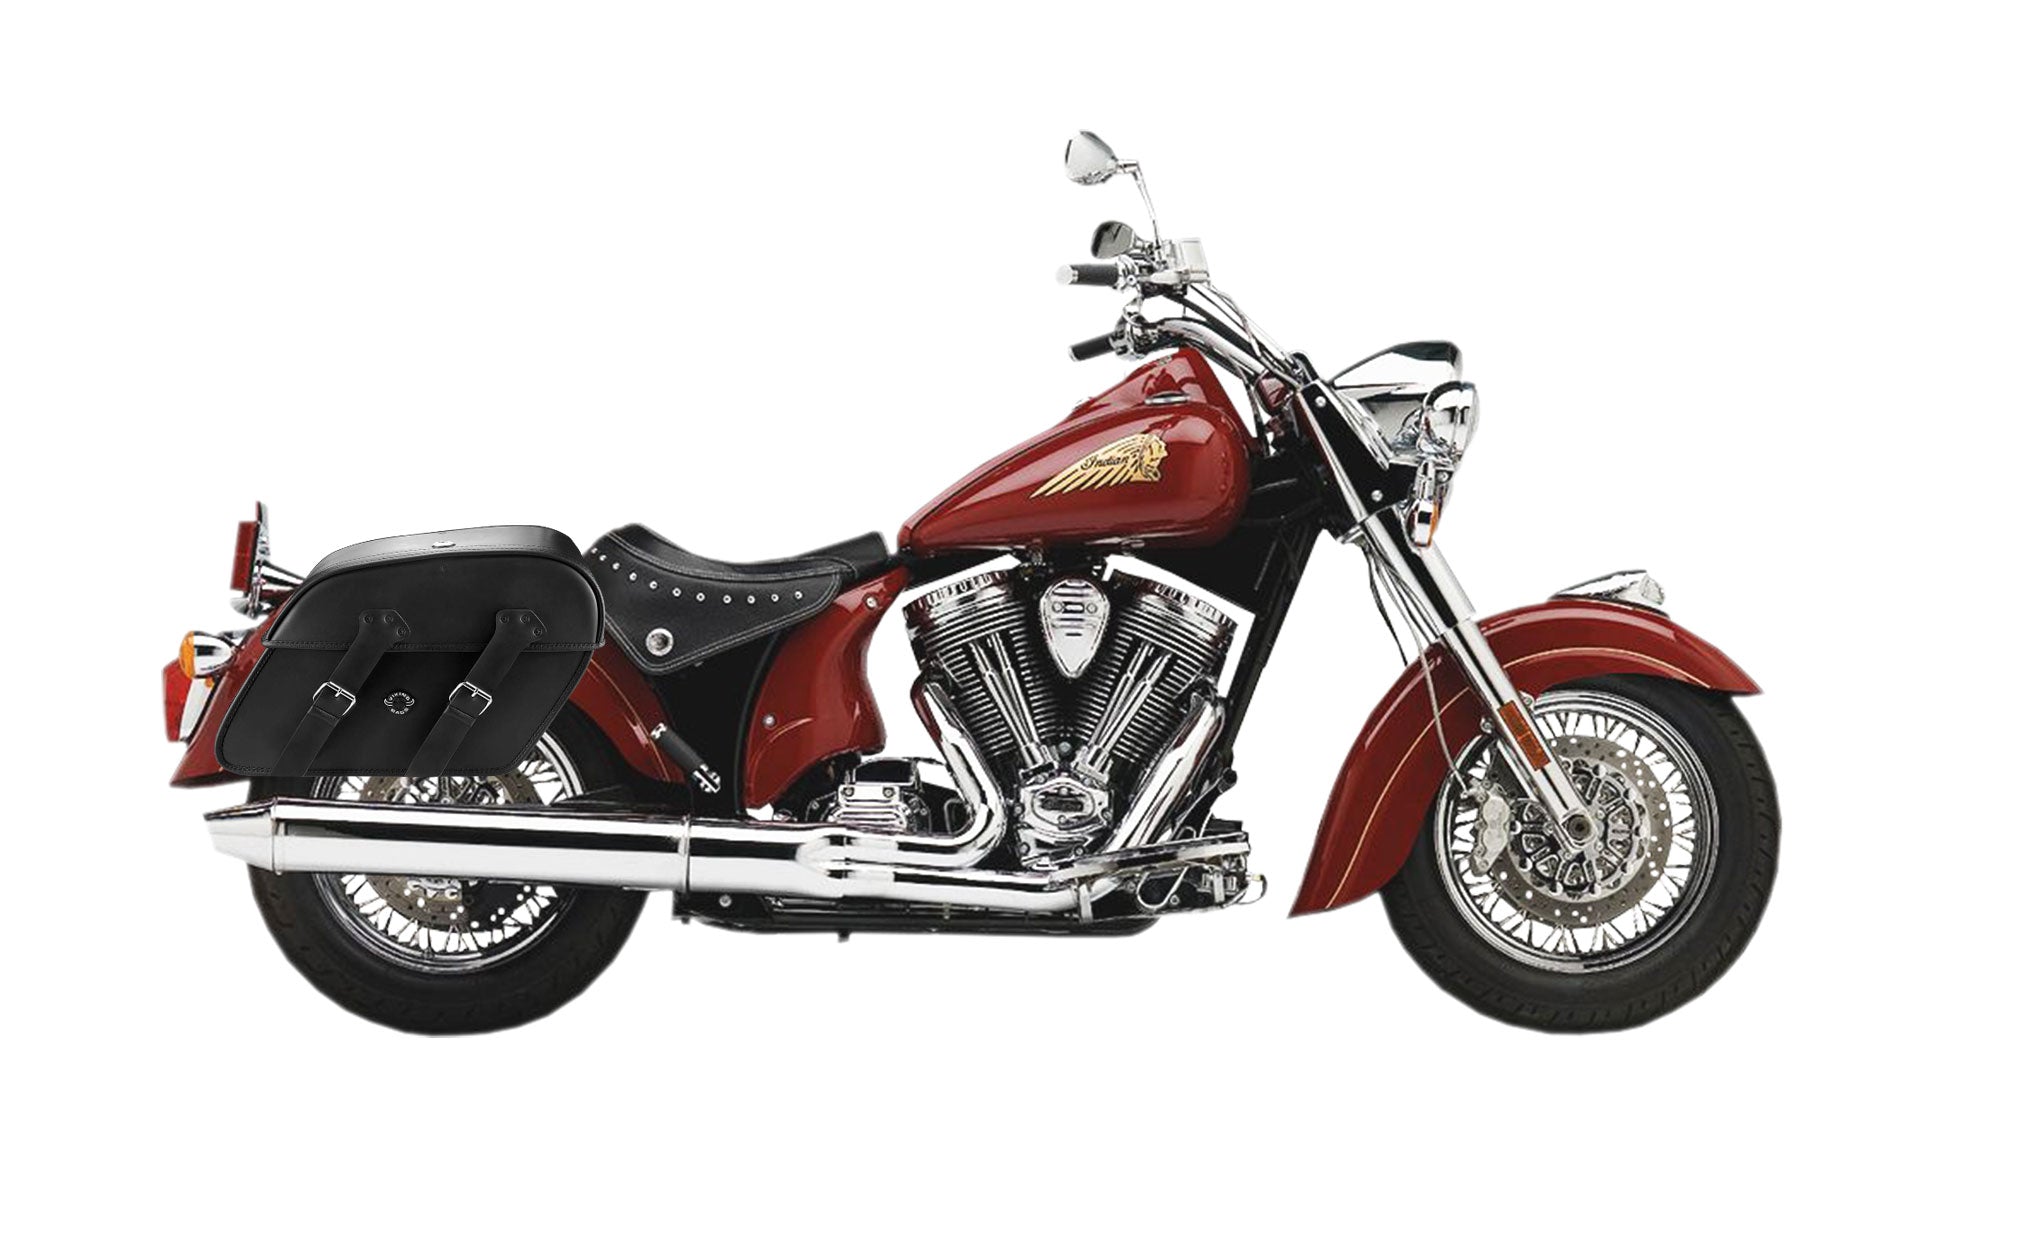 Viking Raven Extra Large Indian Chief Standard Leather Motorcycle Saddlebags on Bike Photo @expand